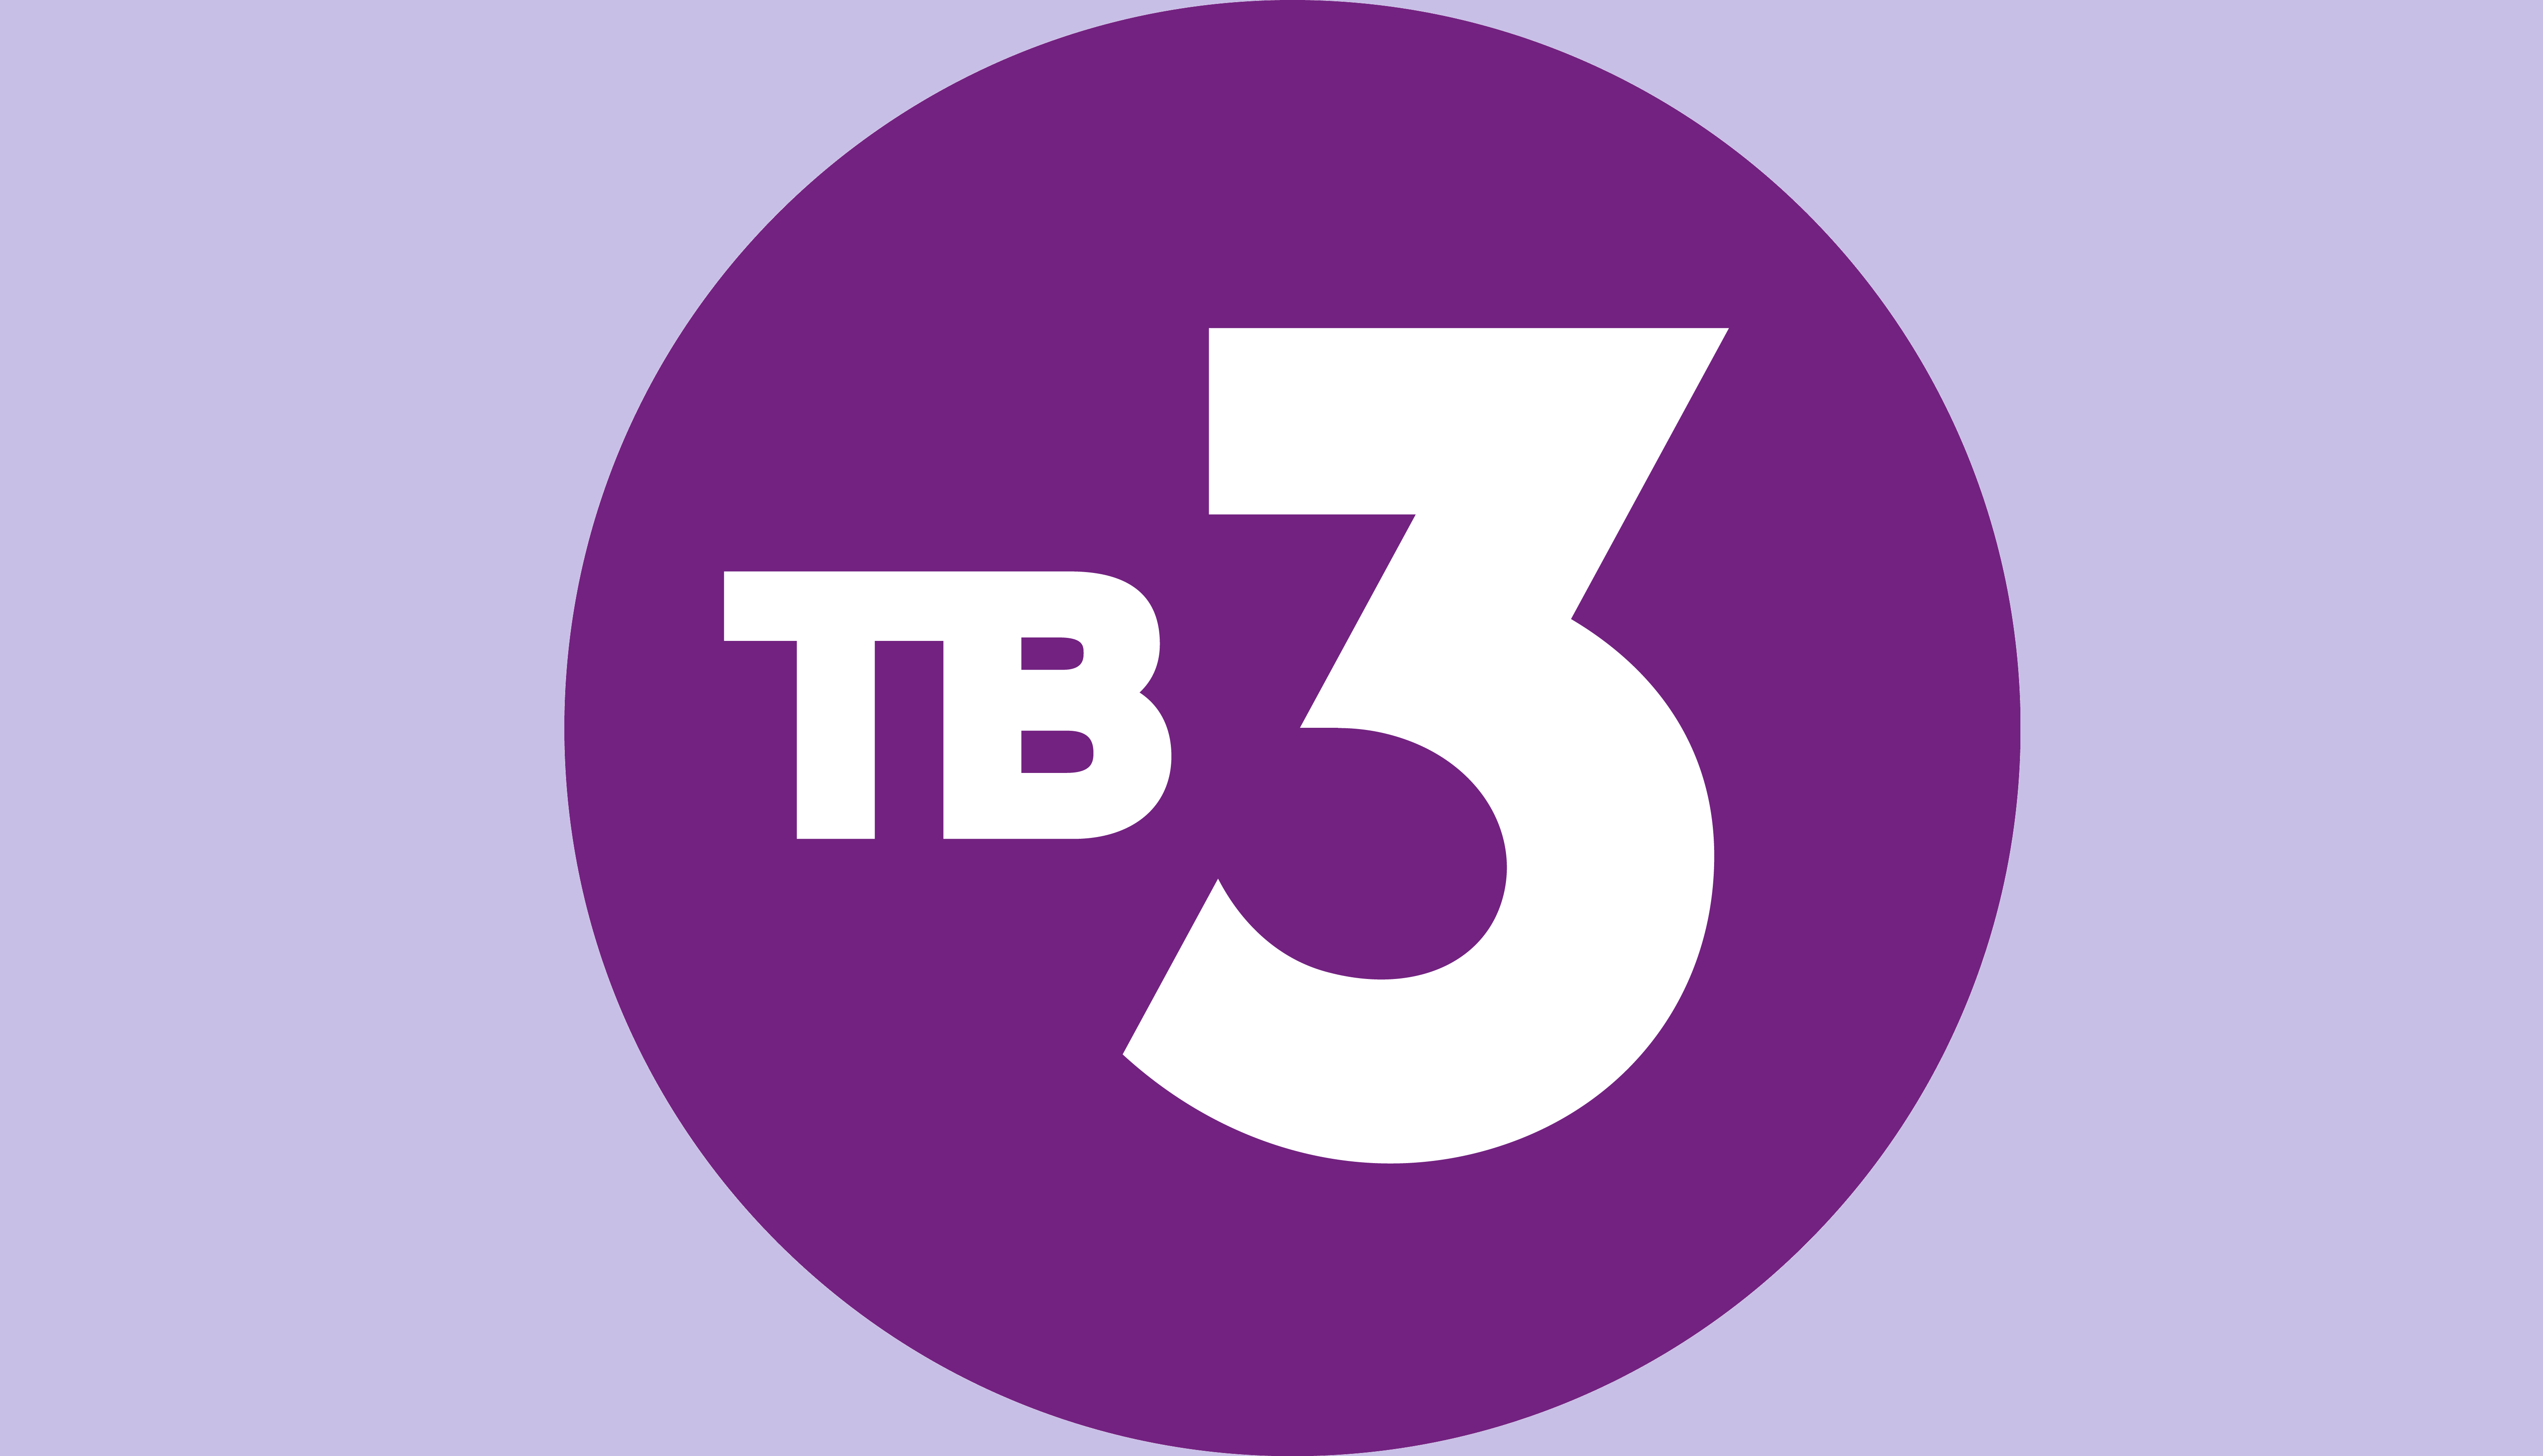 Тв3 логотип. ТВ 3 эмблема. Телеканал тв3. Логотип канала тв3.